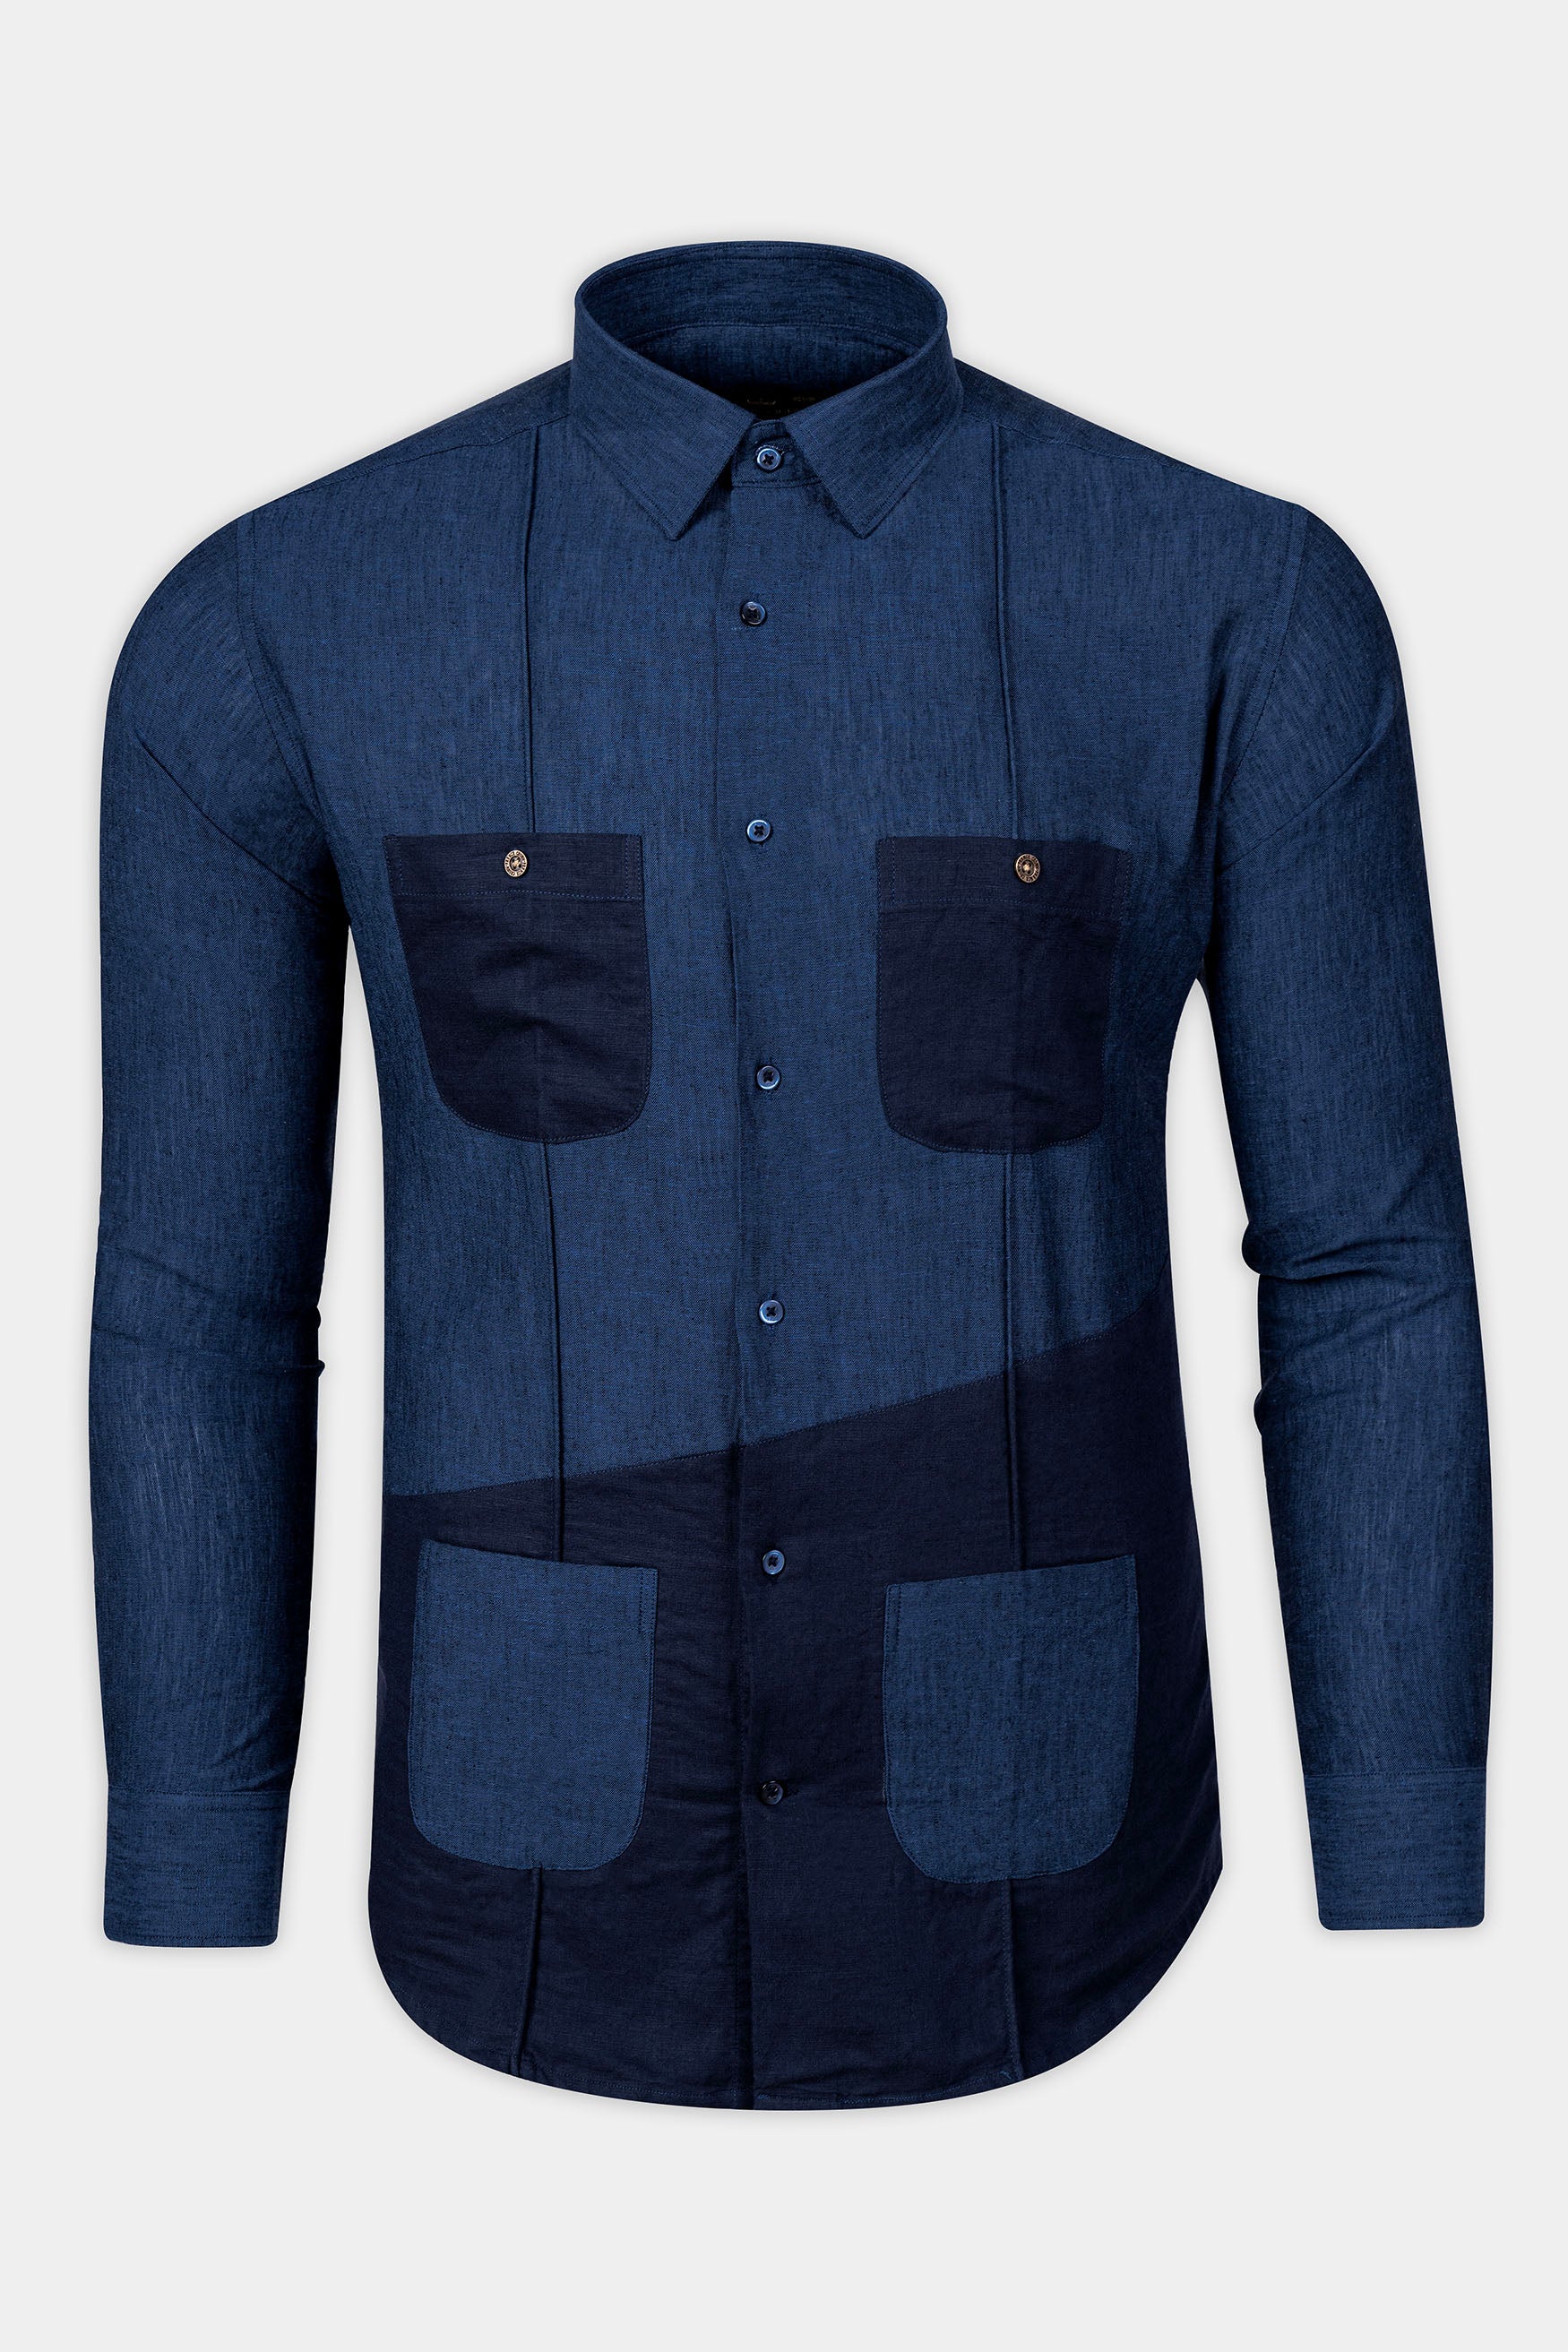 Rhino Blue Luxurious Linen Designer Shirt